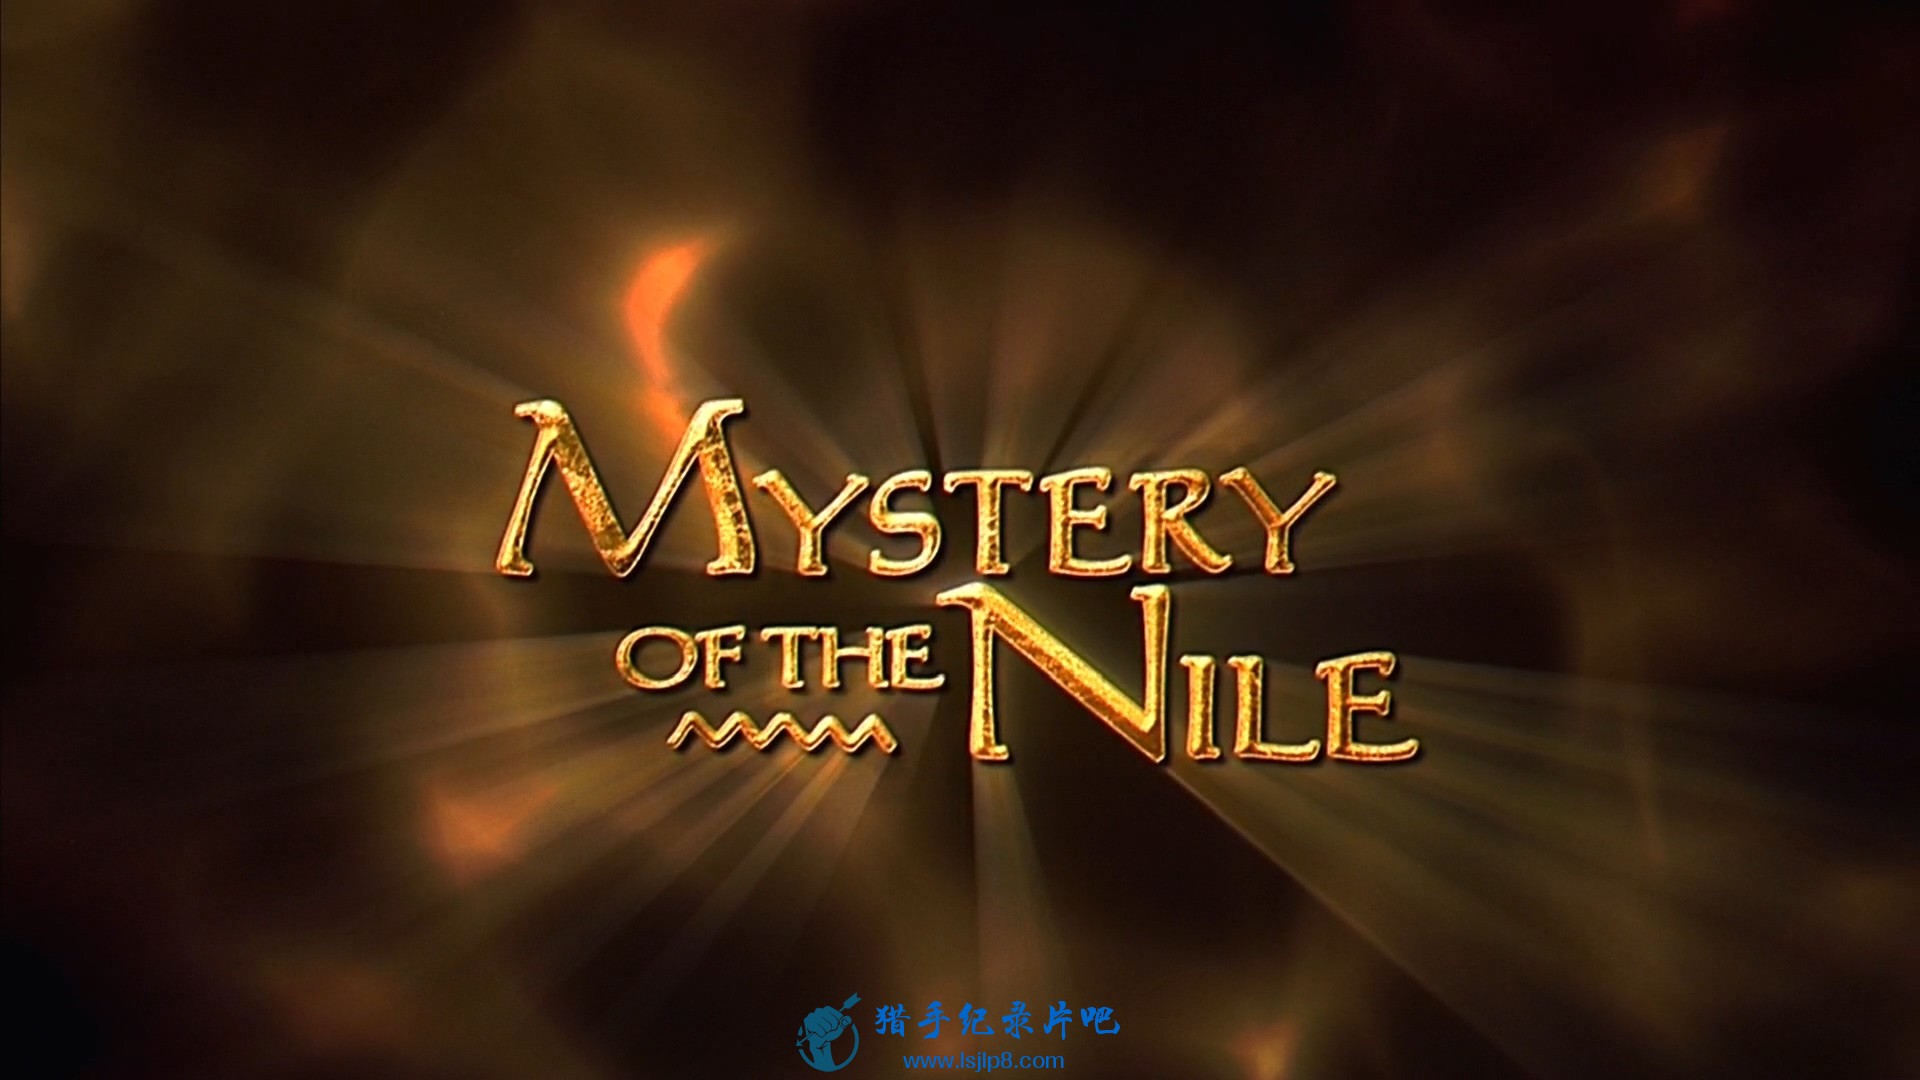 Mystery.of.the.Nile.IMAX.Blu-ray.RE.1080.X264.DTS.SiluHD.mkv_20191018_130216.809.jpg